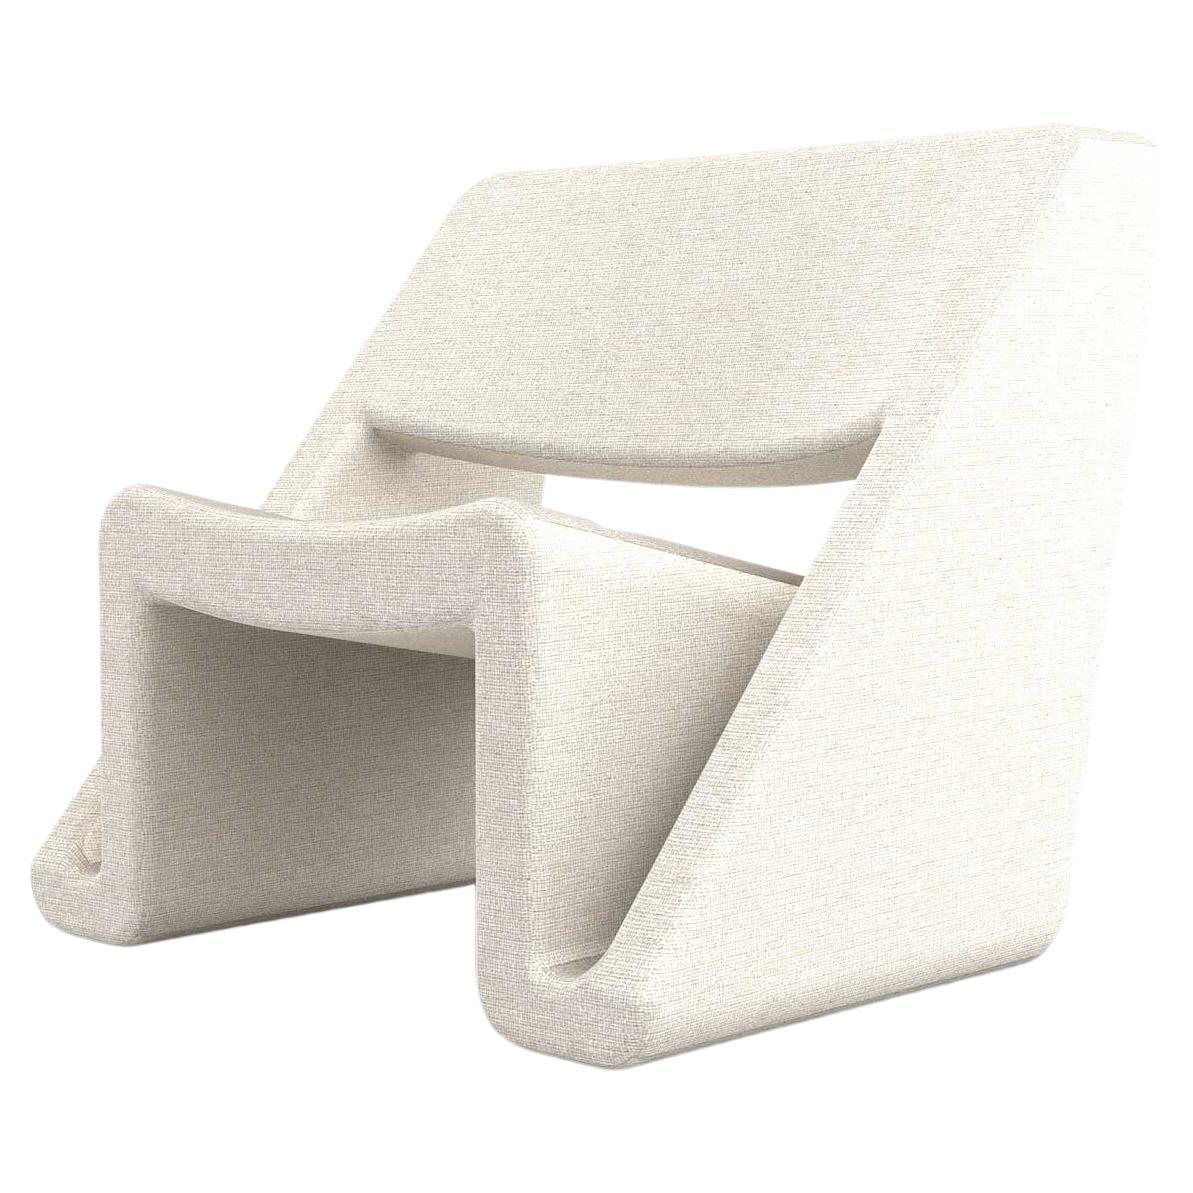 Jet Armchair - Modern White Upholstered Armchair For Sale